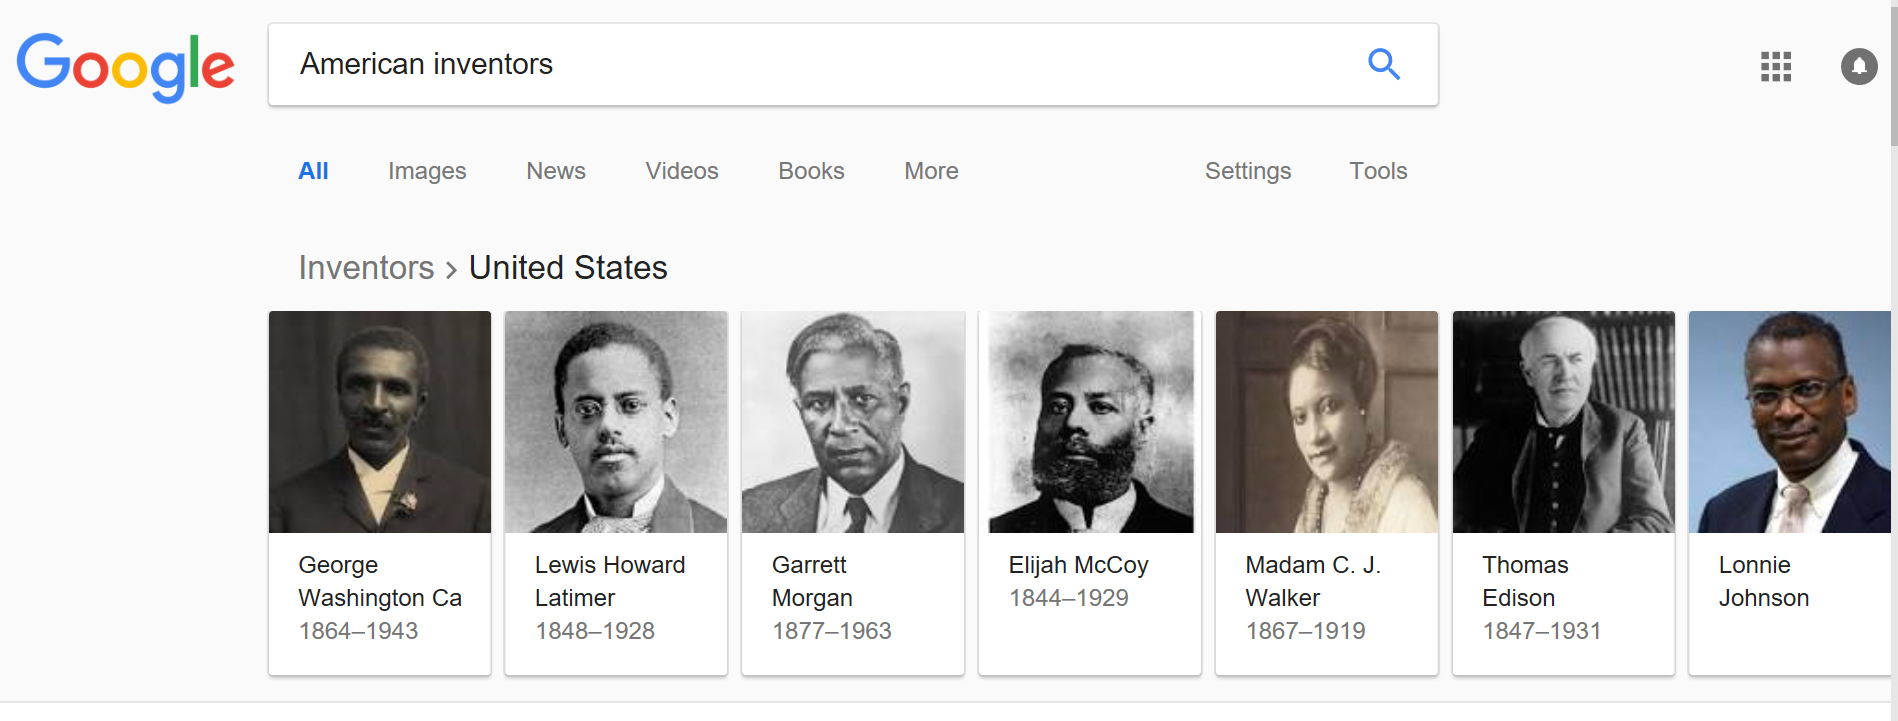 Google's American Inventors